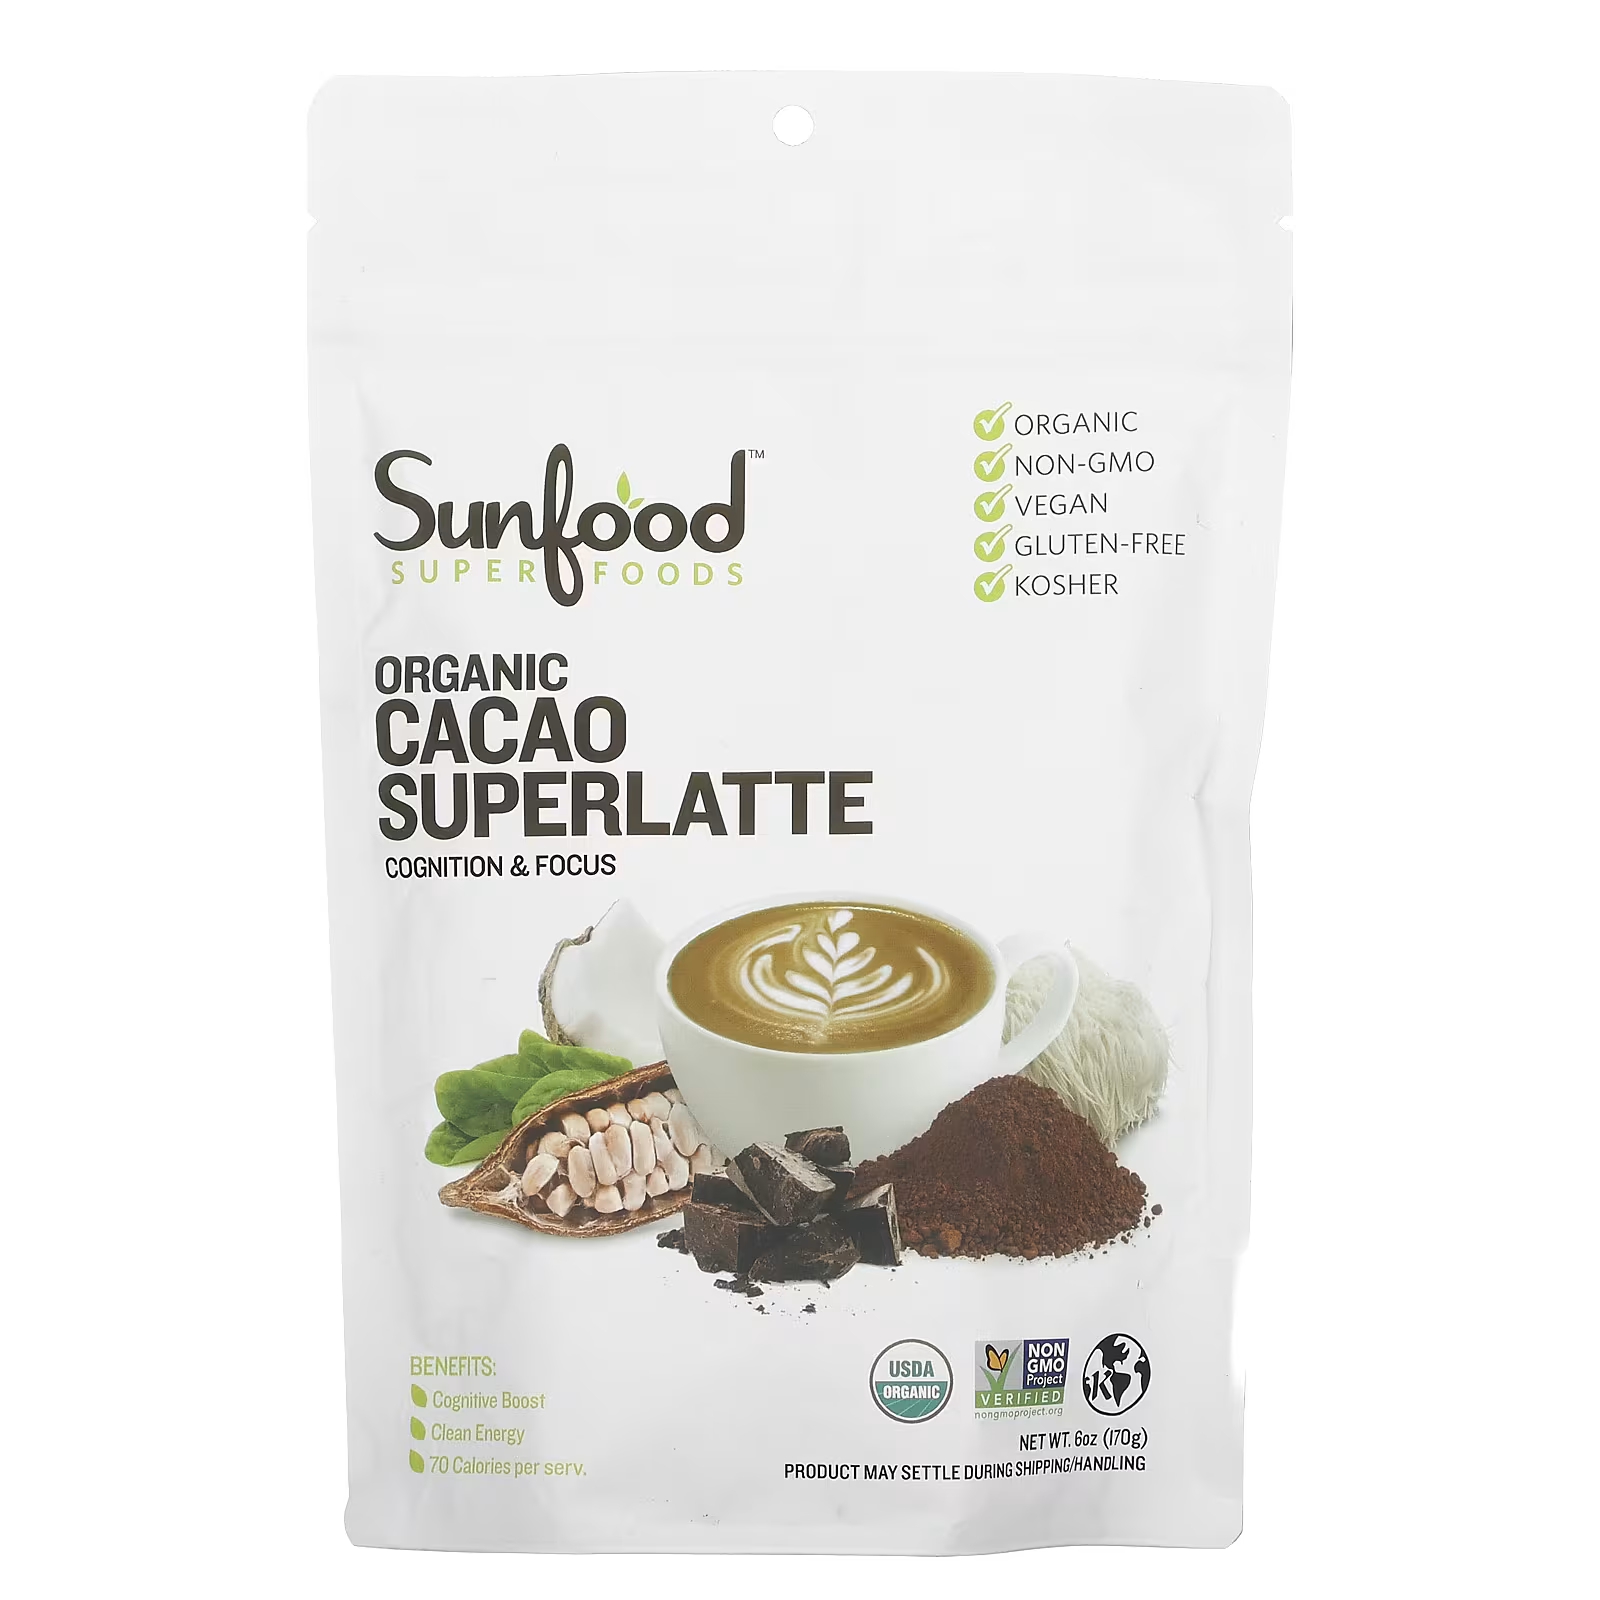 Sunfood органический суперлатте какао 170 г (6 унций)